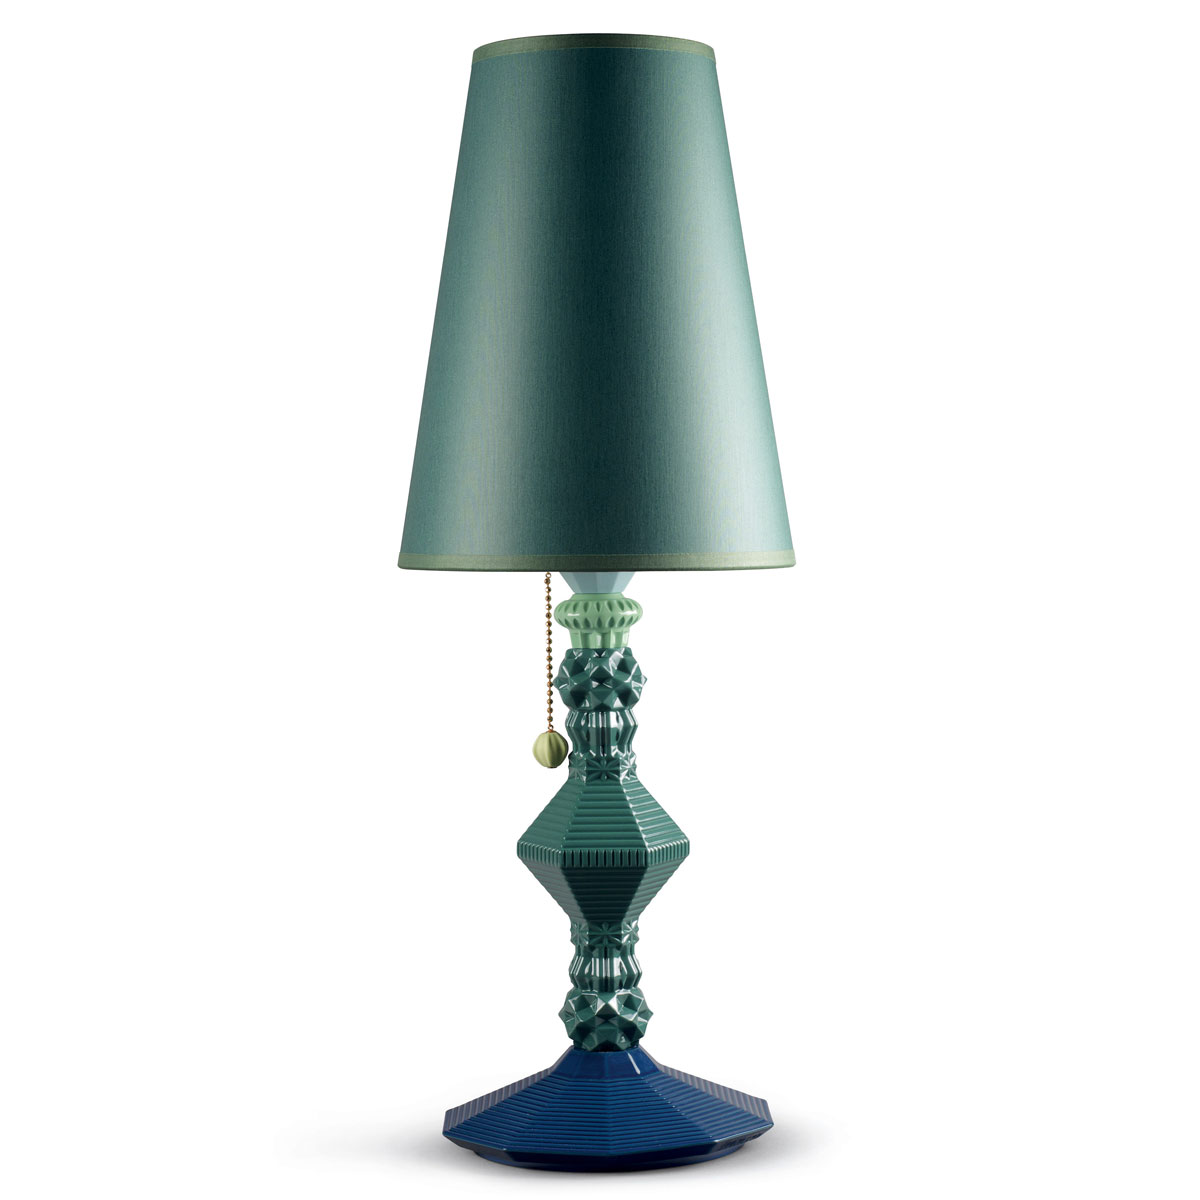 Lladro Classic Lighting, Belle De Nuit Table Lamp. Green